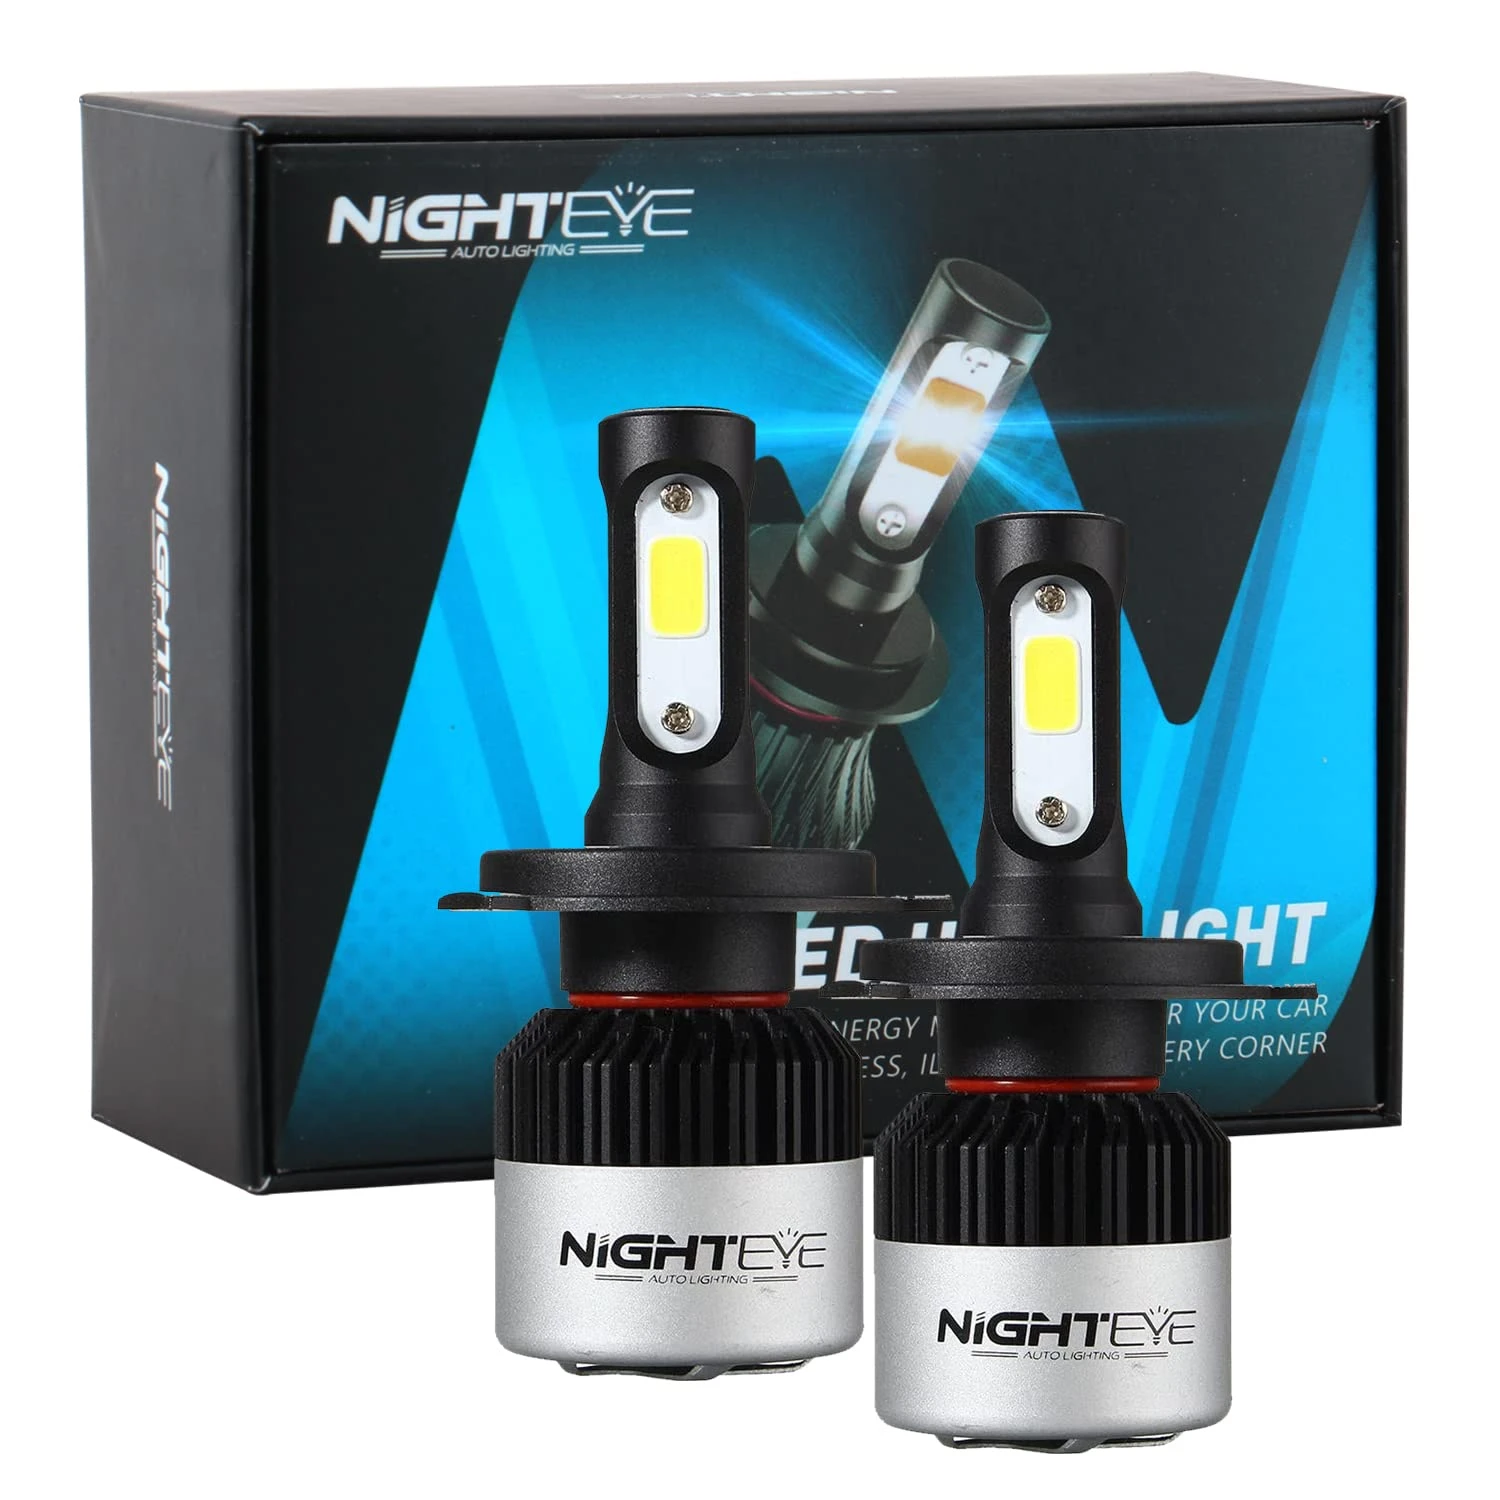 H4 NIGHTEYE LED Headlight Bulb 72W - Cool White (Set of 2): Auto Oprema  AO-B0HGWZ9 -compatibility, features, prices. boodmo